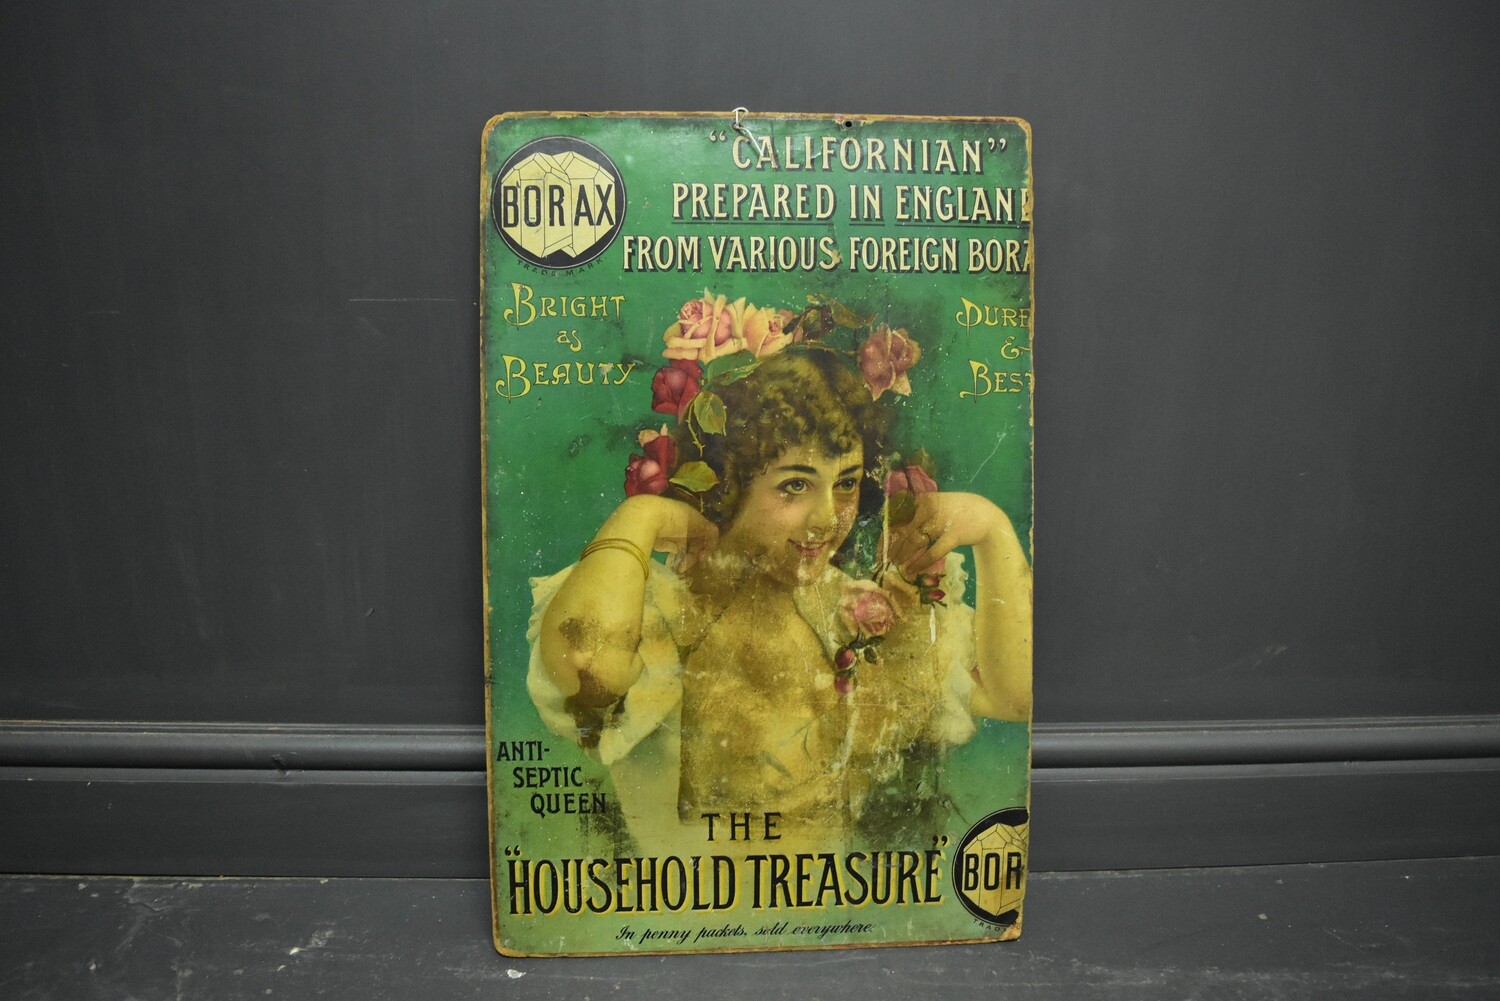 Borax Advert "The Household Treasure"